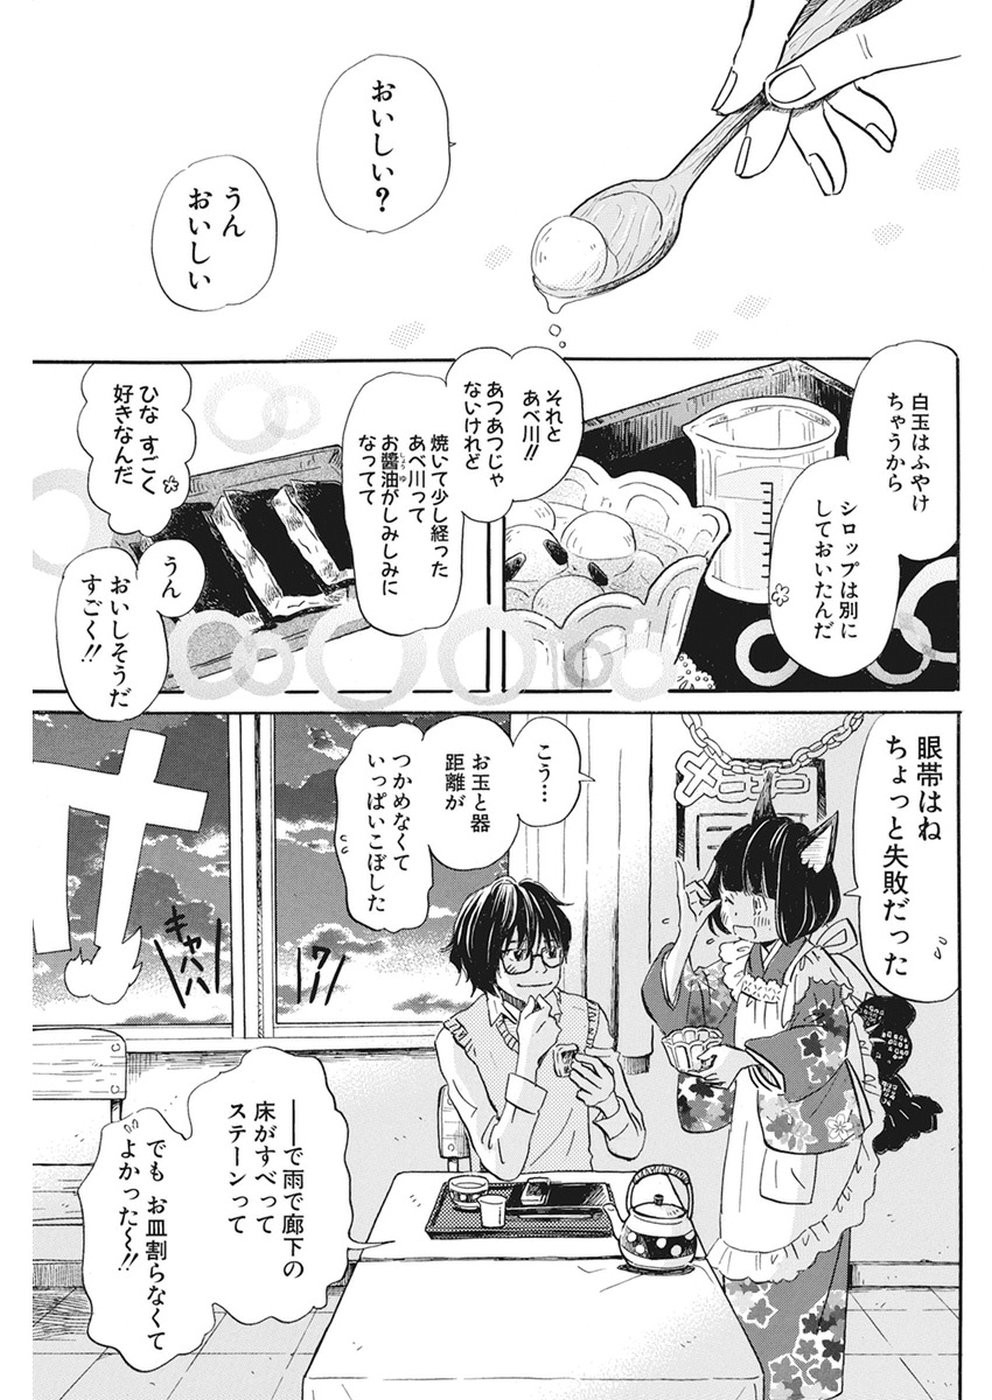 3 Gatsu no Lion - Chapter 154 - Page 2